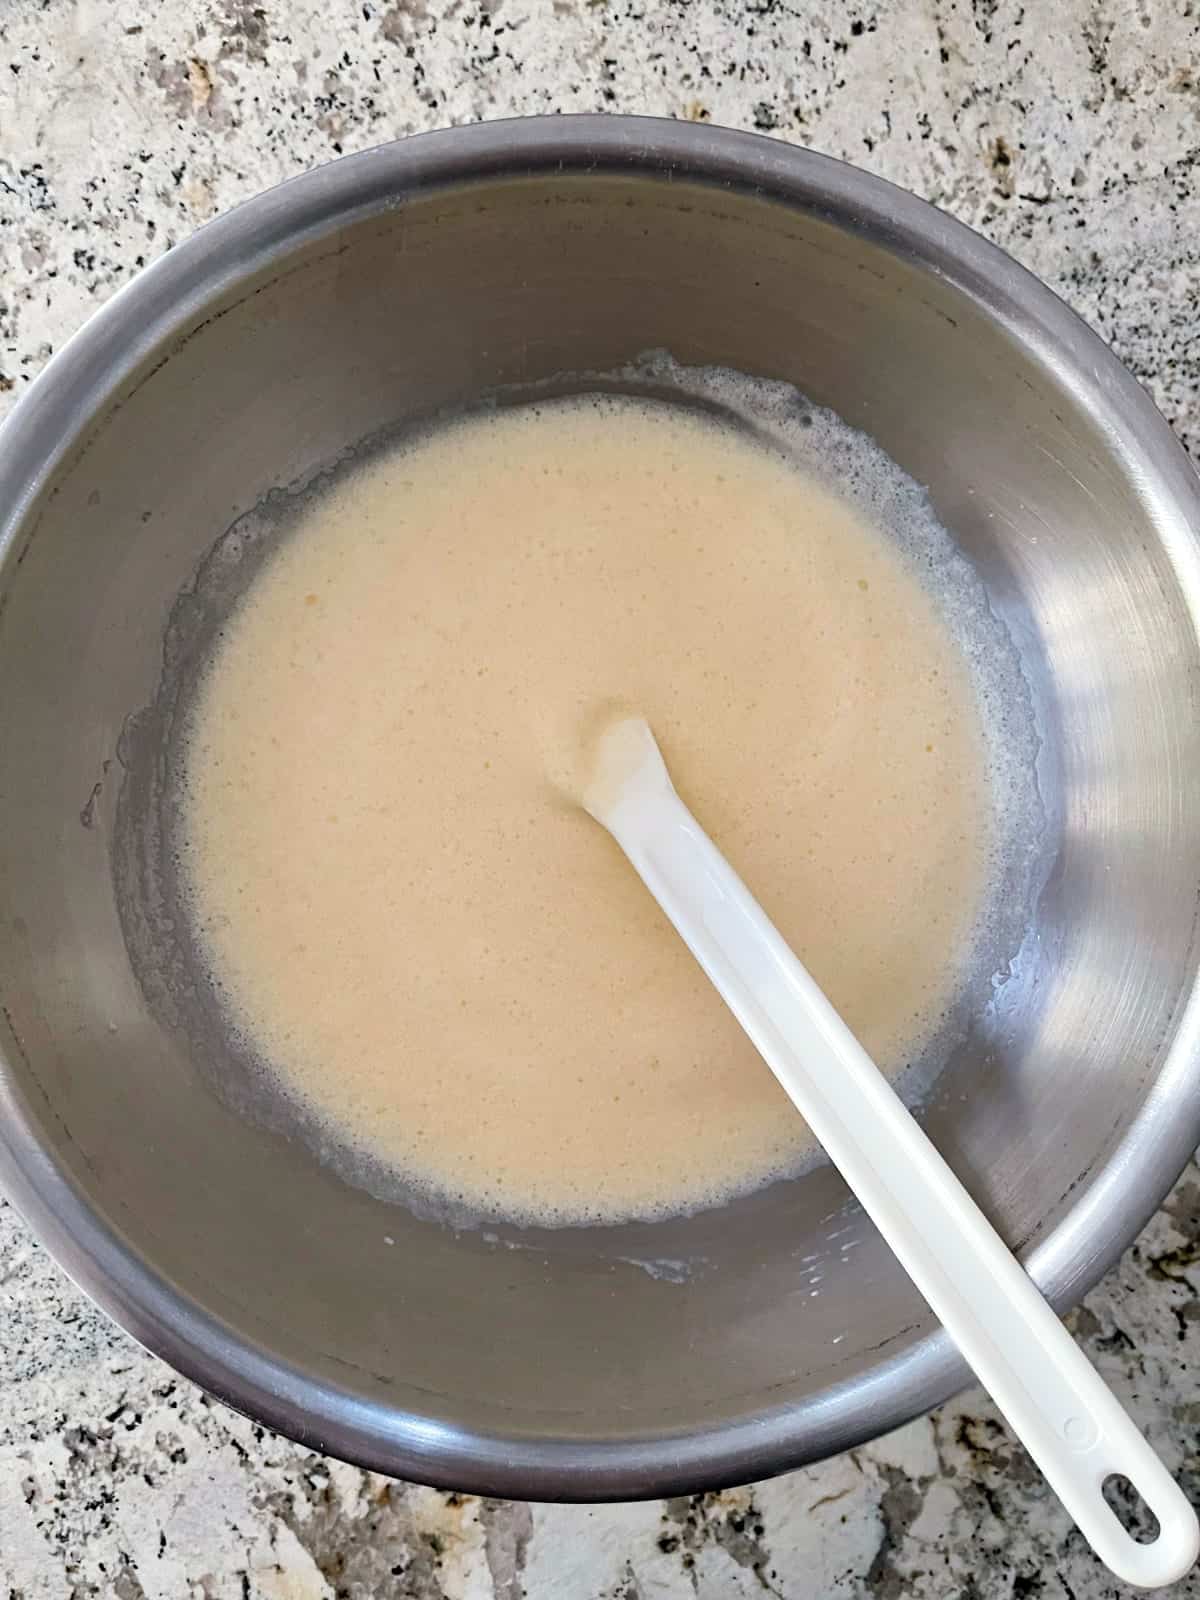 Folding egg whites into egg whites with white spatula in stainless mixing bowl.